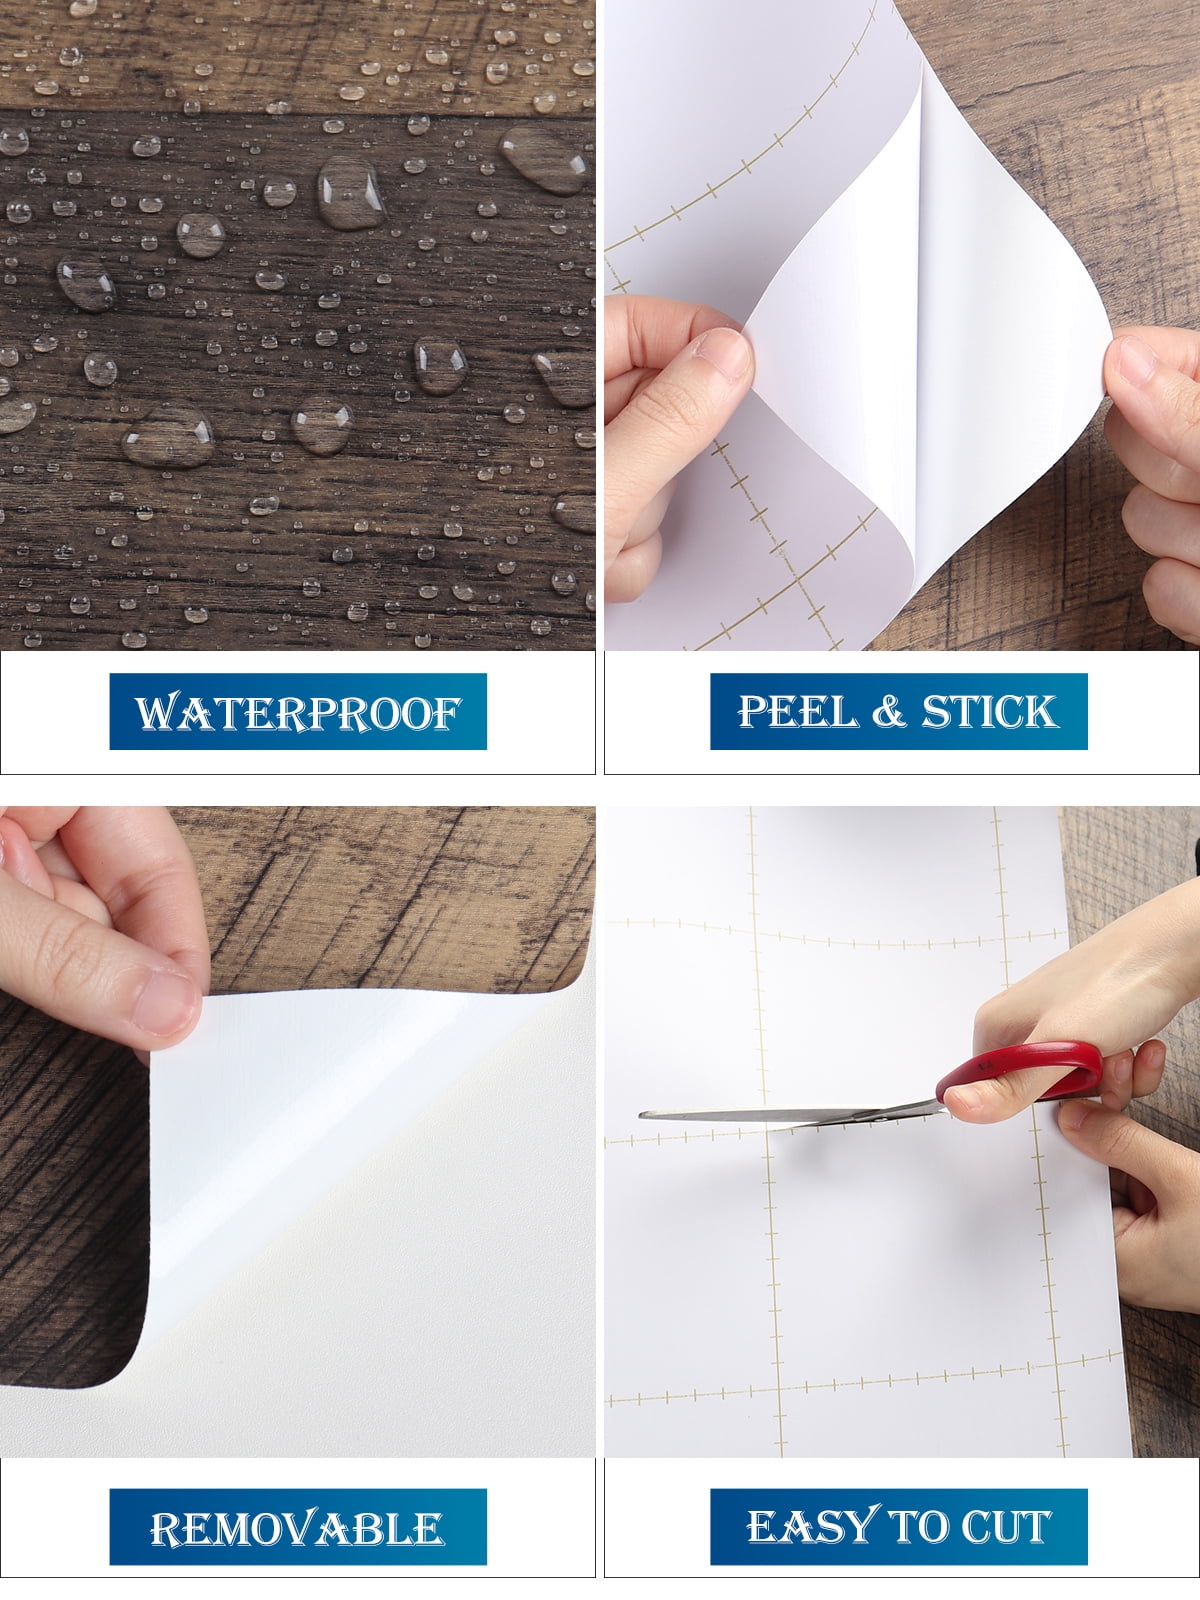 FunStick Brown Slats Wood Wallpaper Peel and Stick Wood Contact